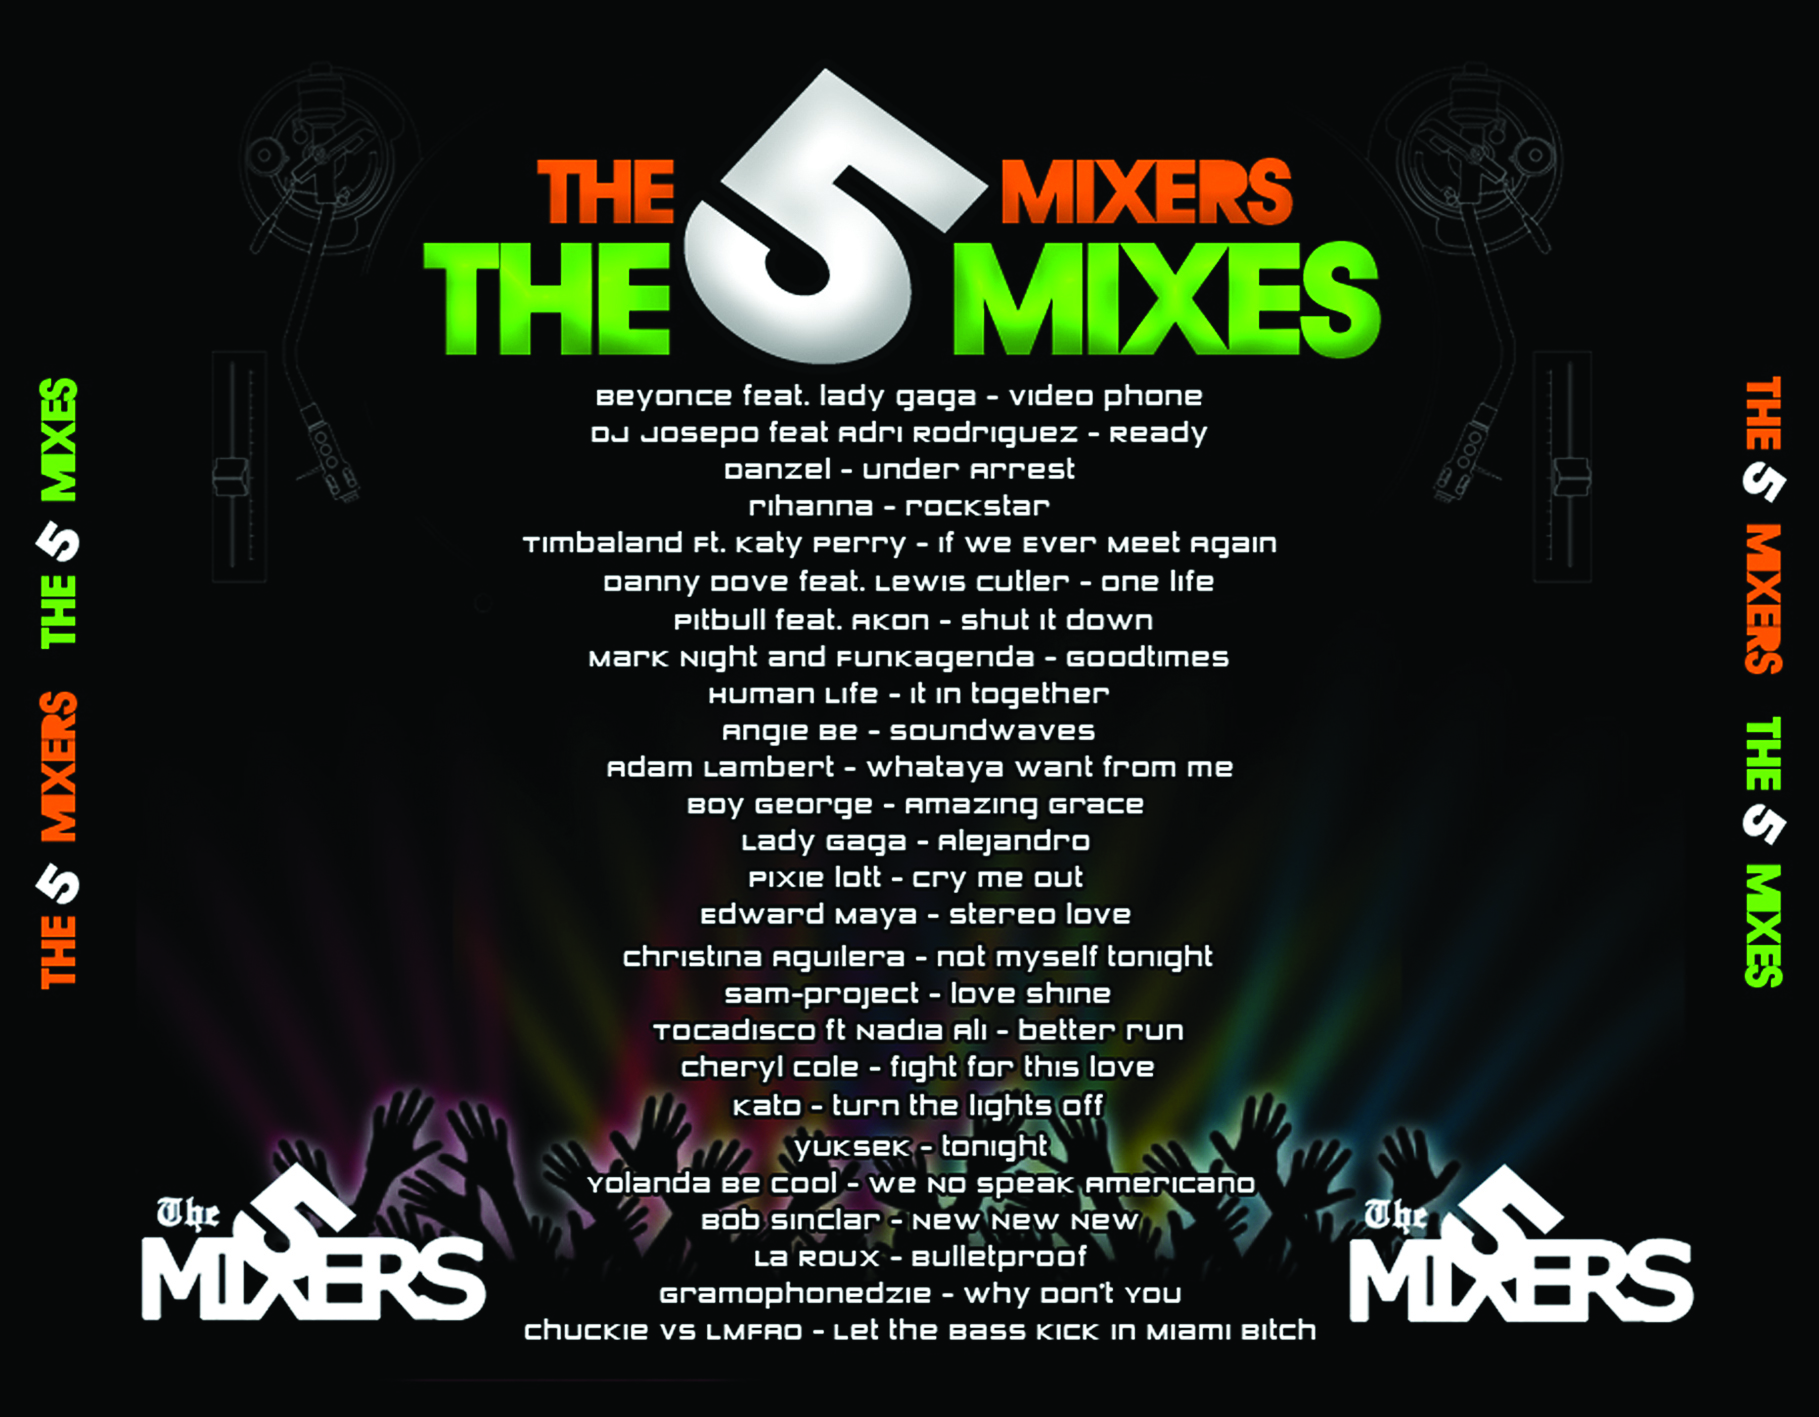 The 5 mixers - Megamix 2010 The5mixescontraportadahiuq